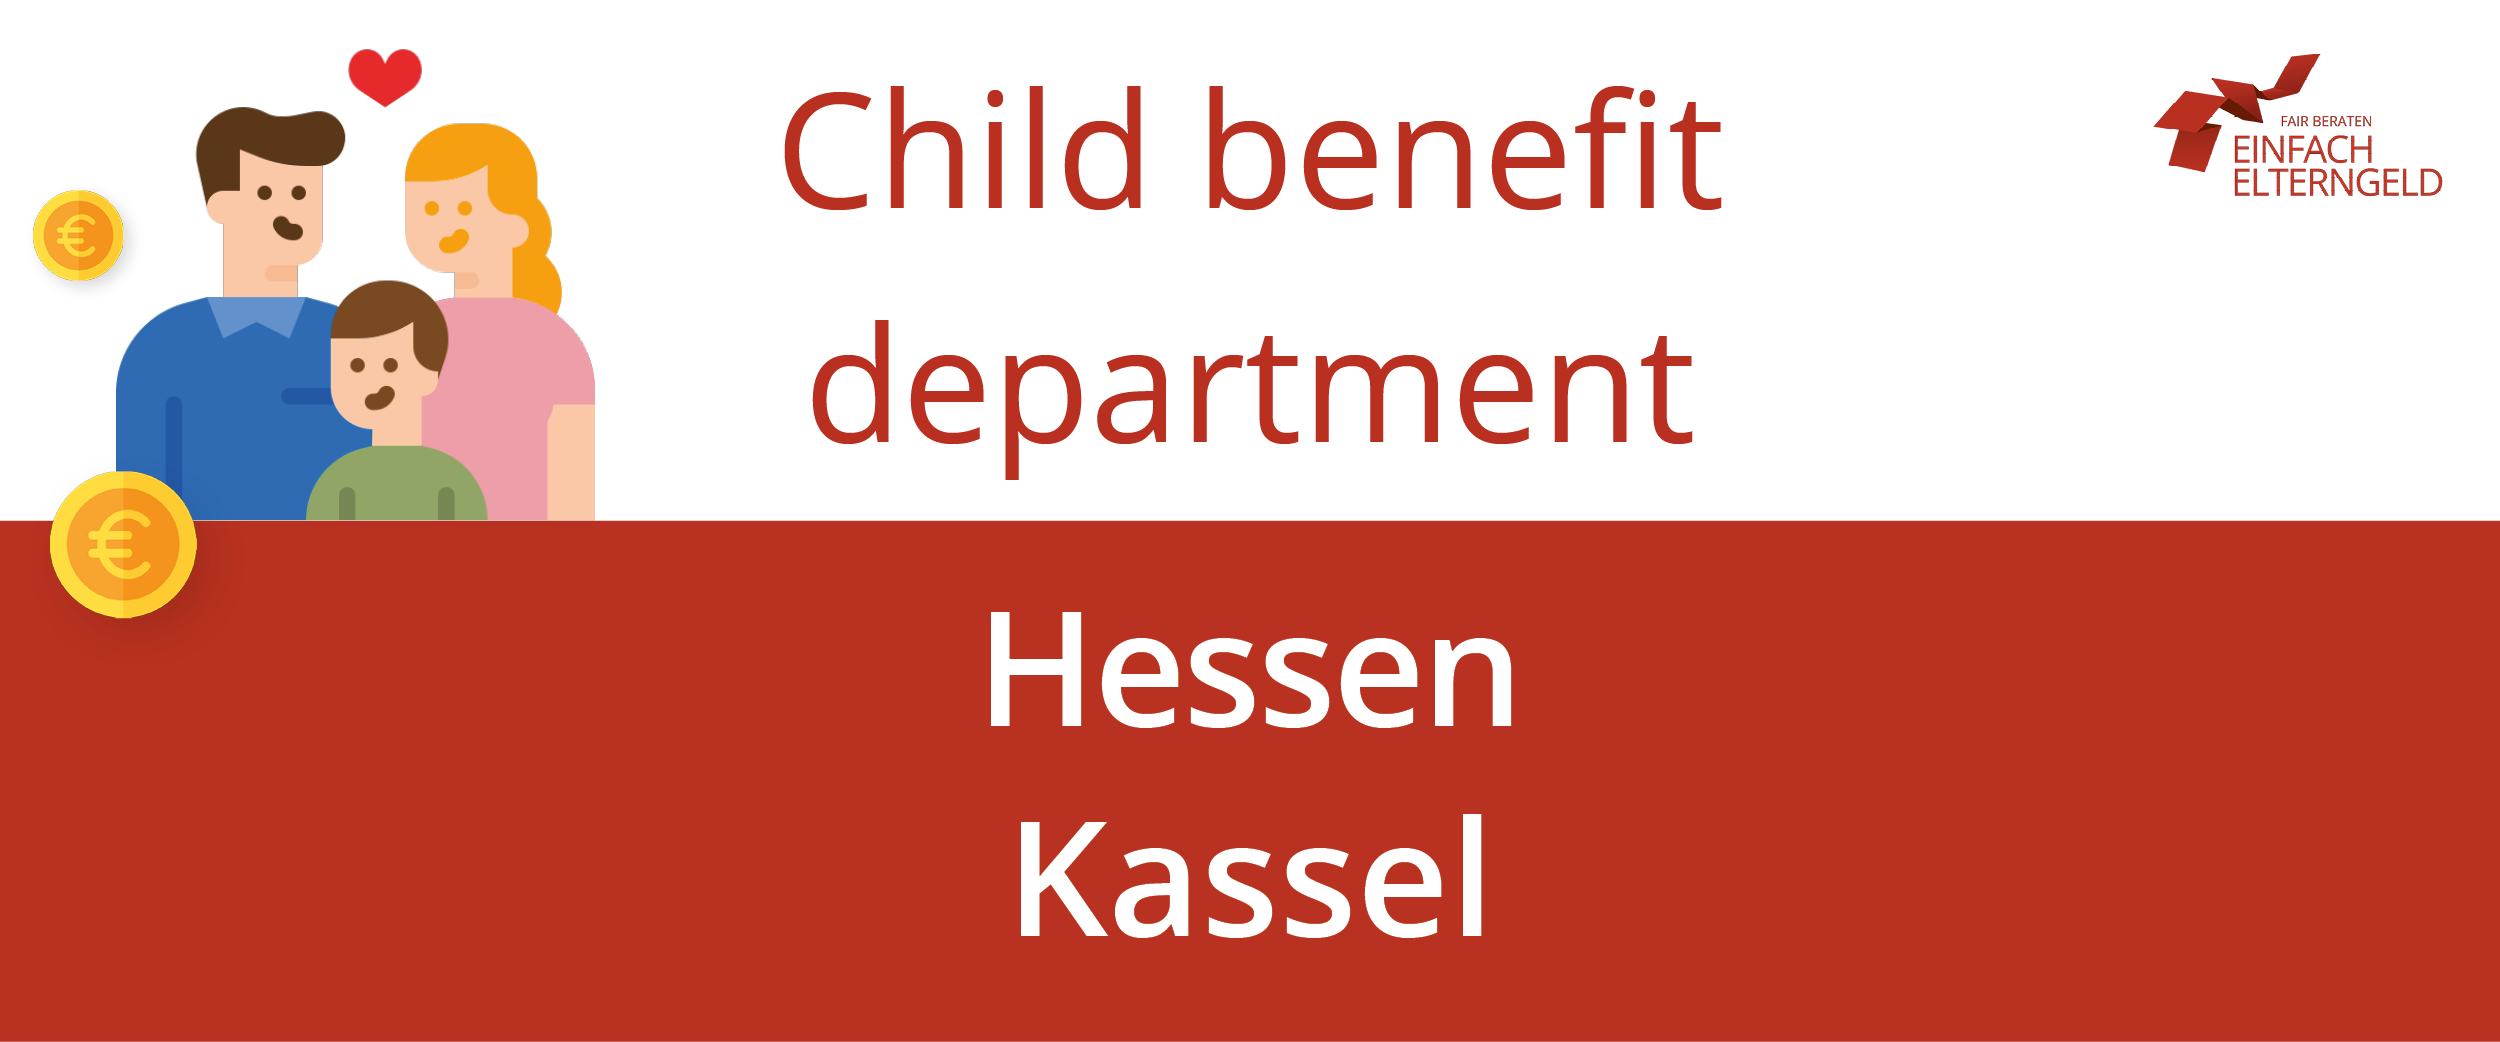 We present you the Child benefit department Hessen Kassel.